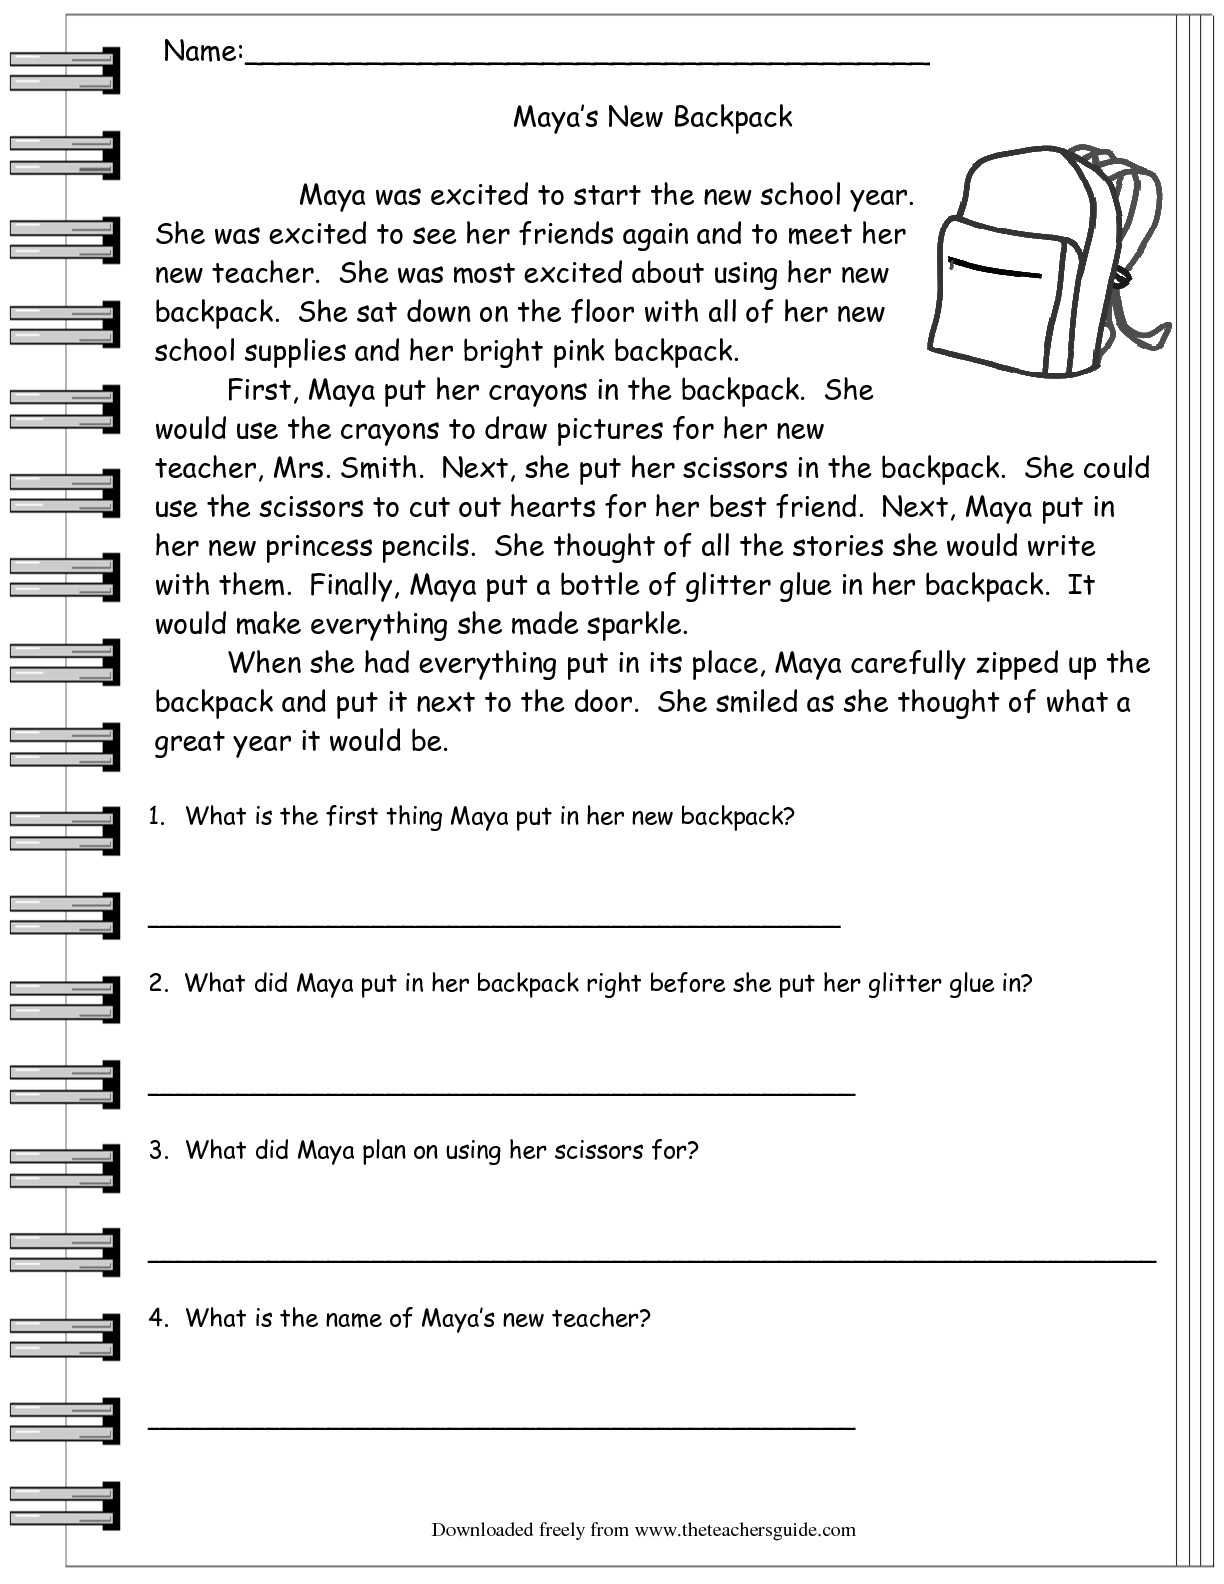 Skills Worksheet Directed Reading A Answer Key as Well as Reading Worksheets with Answer Key the Best Worksheets Image